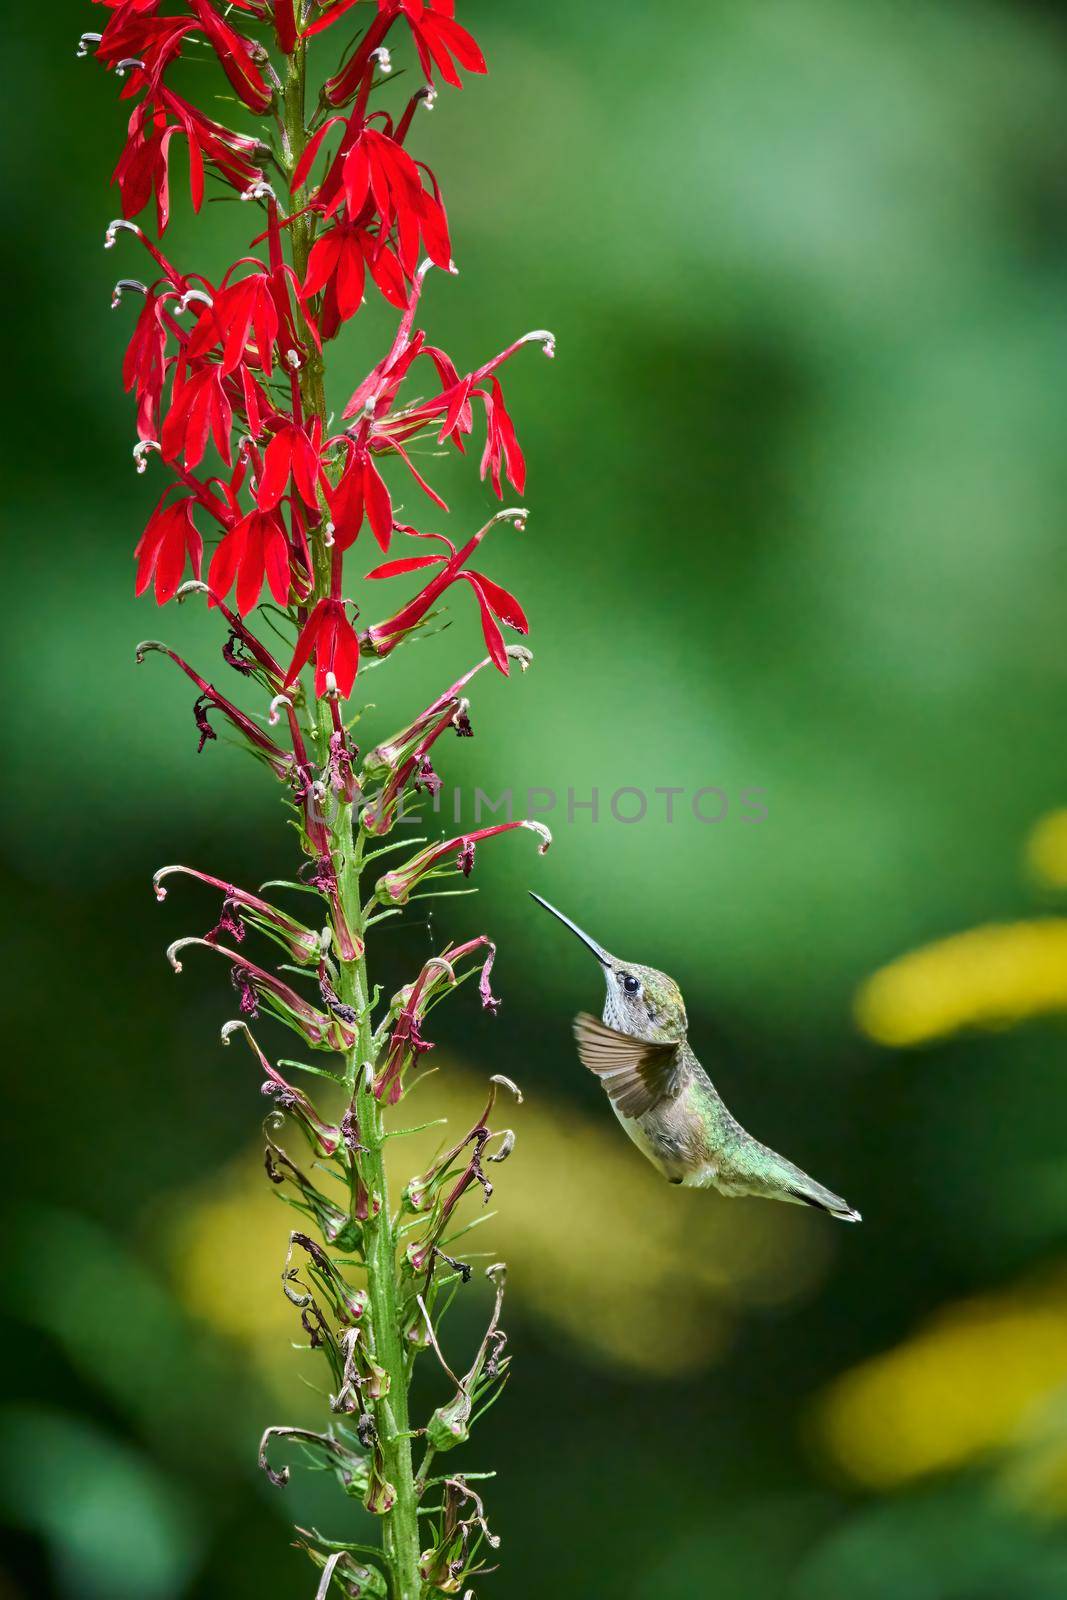 Ruby-throated Hummingbird (rchilochus colubris) feeding on a cardinal flower (Lobelia cardinalis).